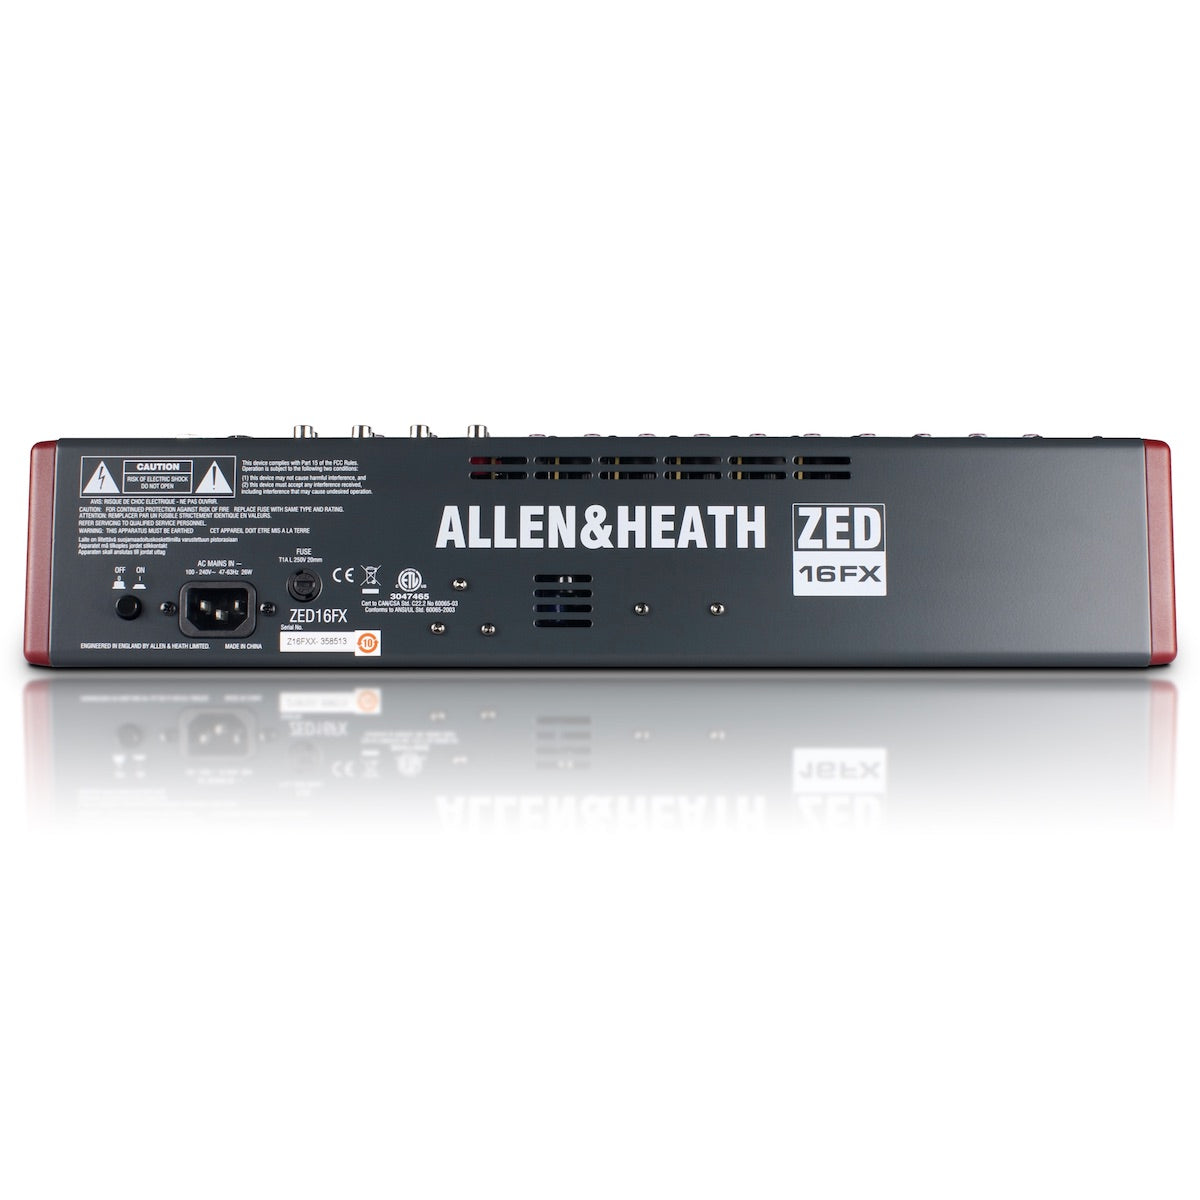 Allen & Heath ZED-16FX 16-Channel Analog USB Mixer with Effects, rear